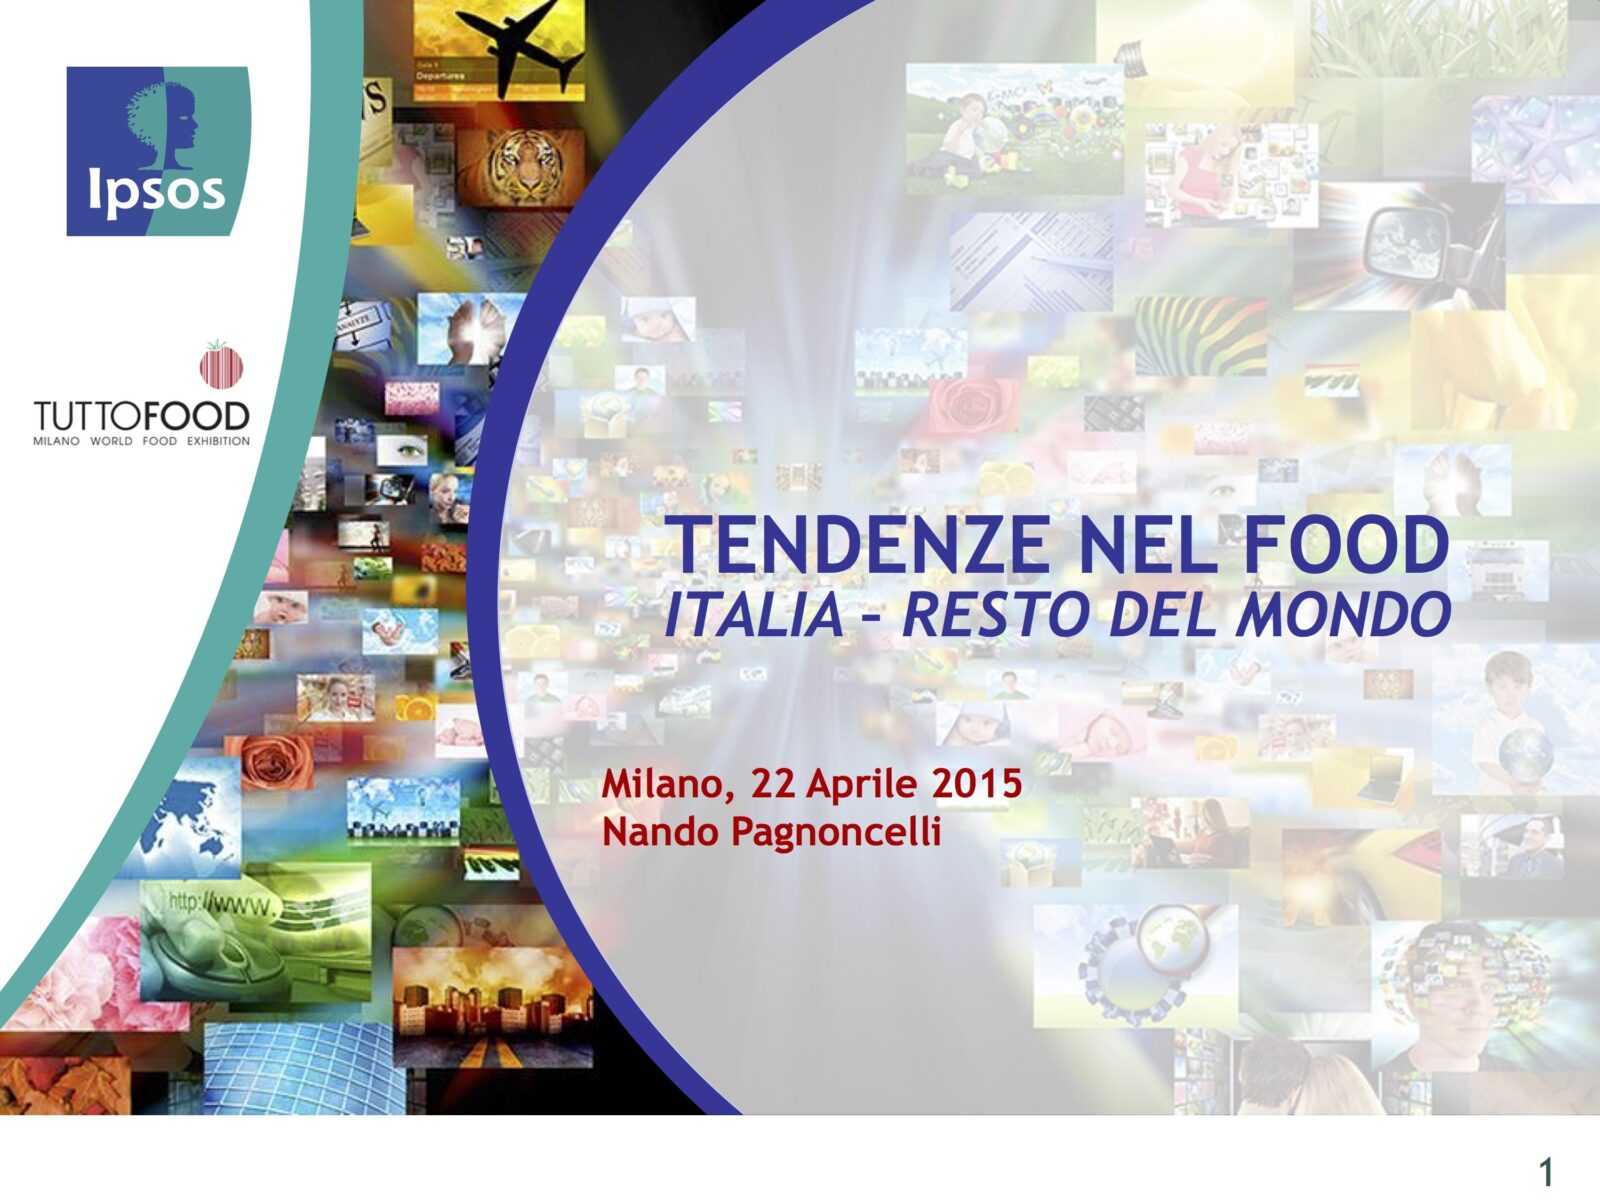 ricerca ipsos 1 ENDENZE DEL FOOD IN ITALIA RESTO DEL MONDO